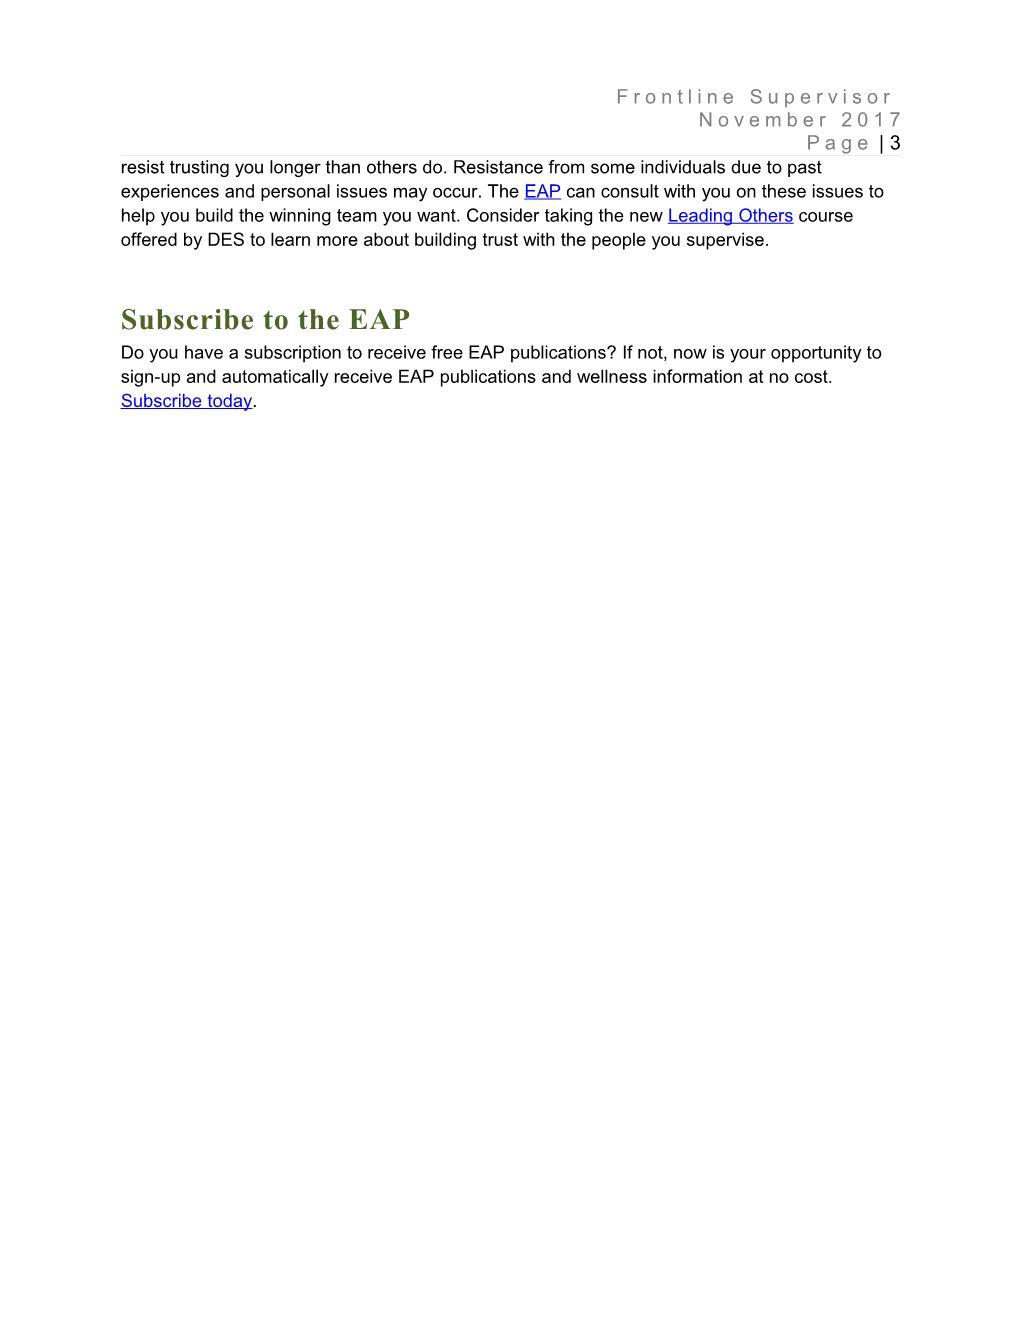 EAP Webinar Orientations Available